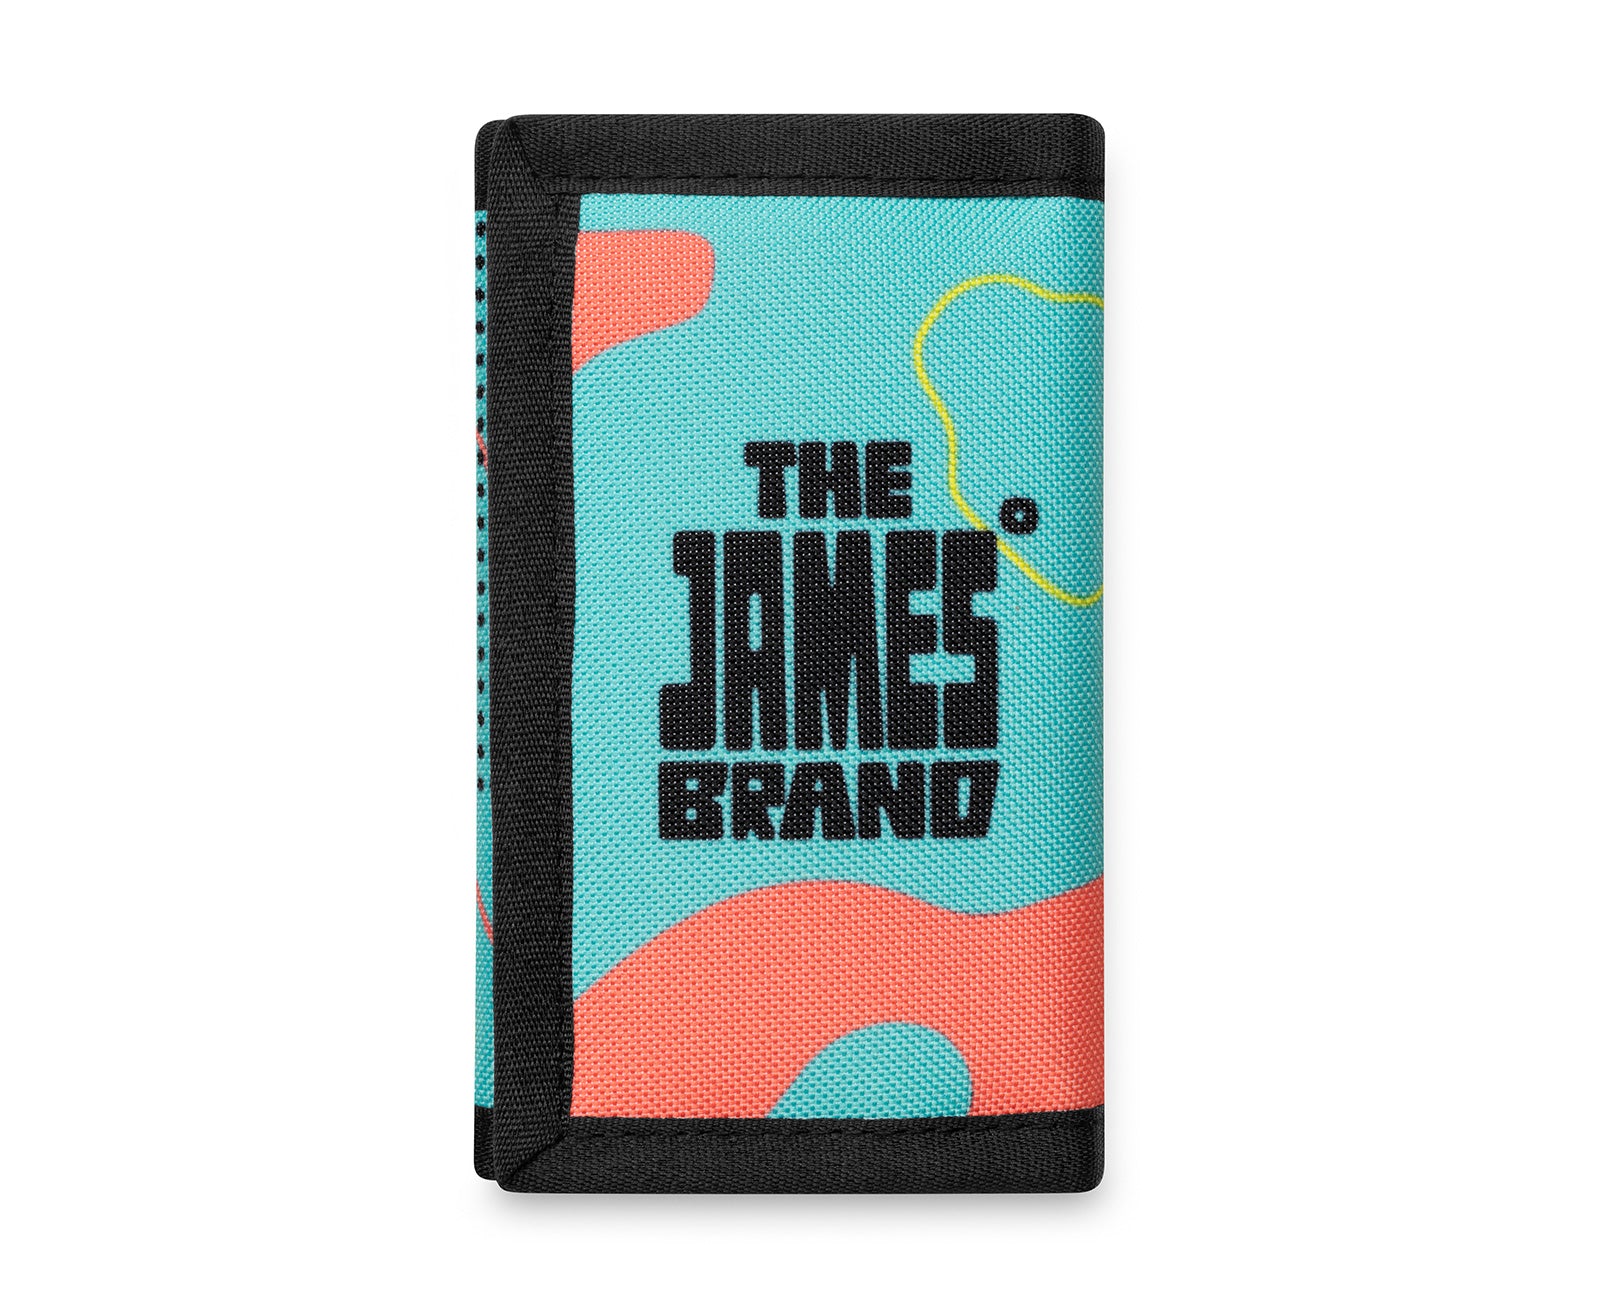 The James Brand tri-fold retro wallet.